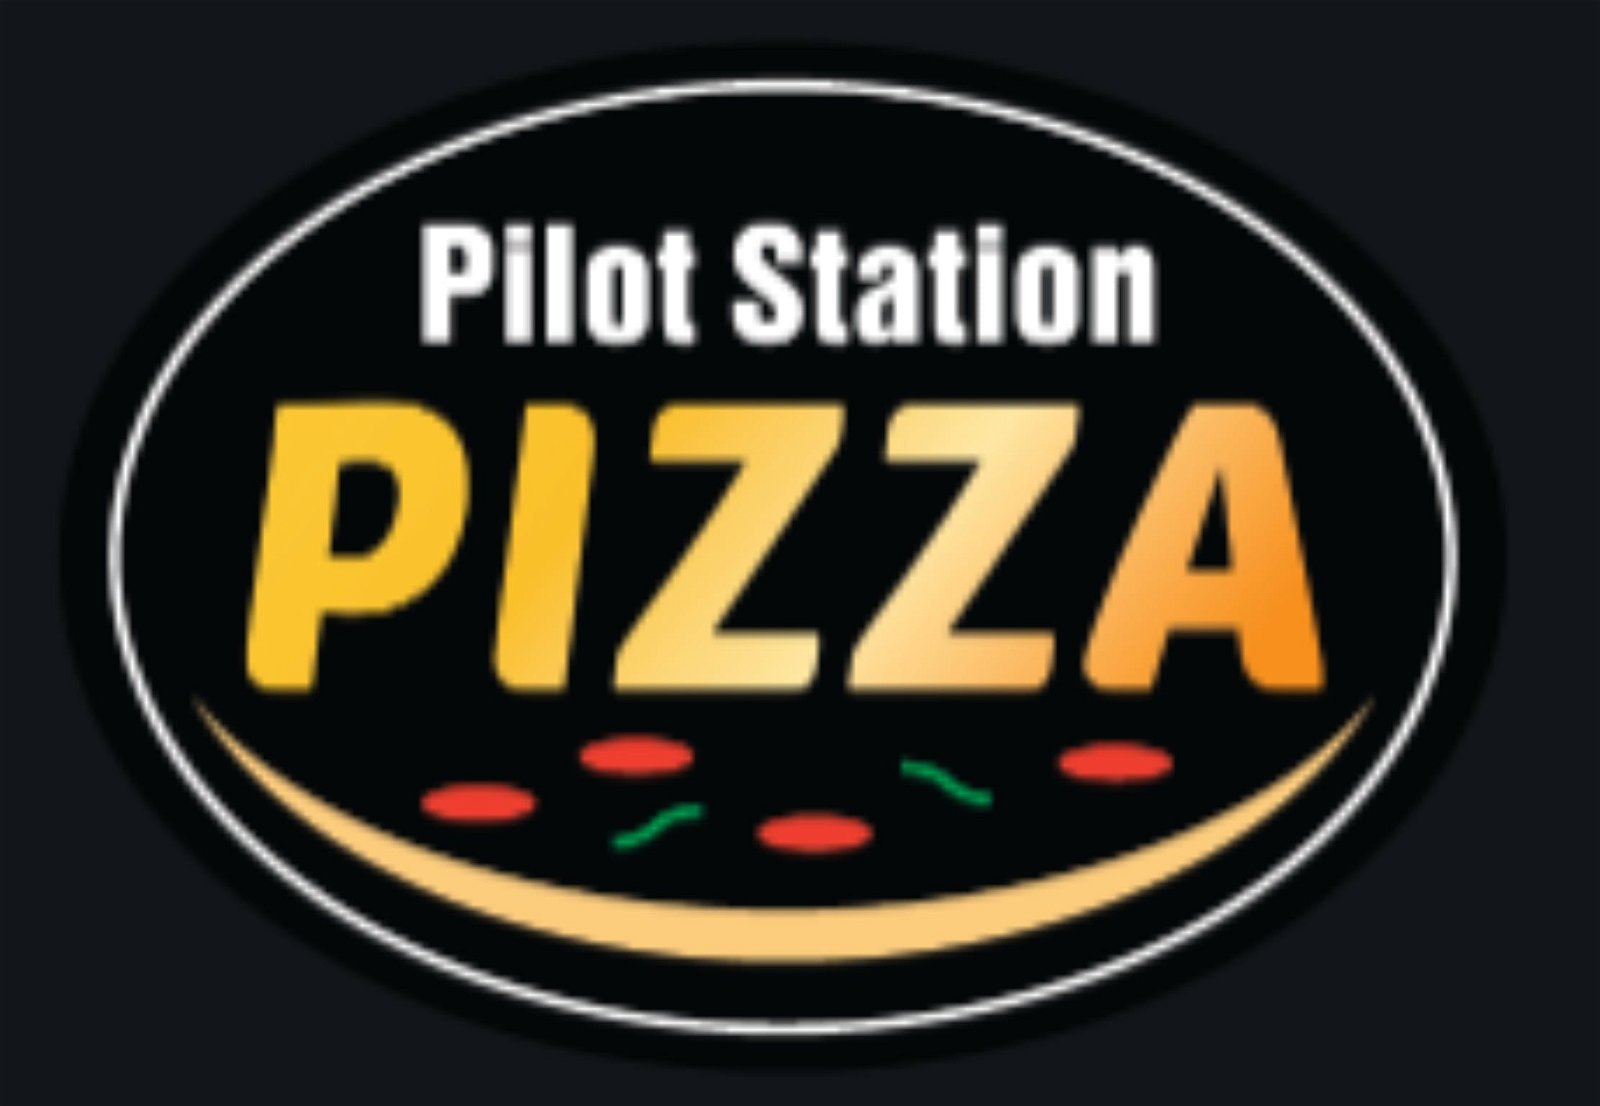 Pilot Station Pizza